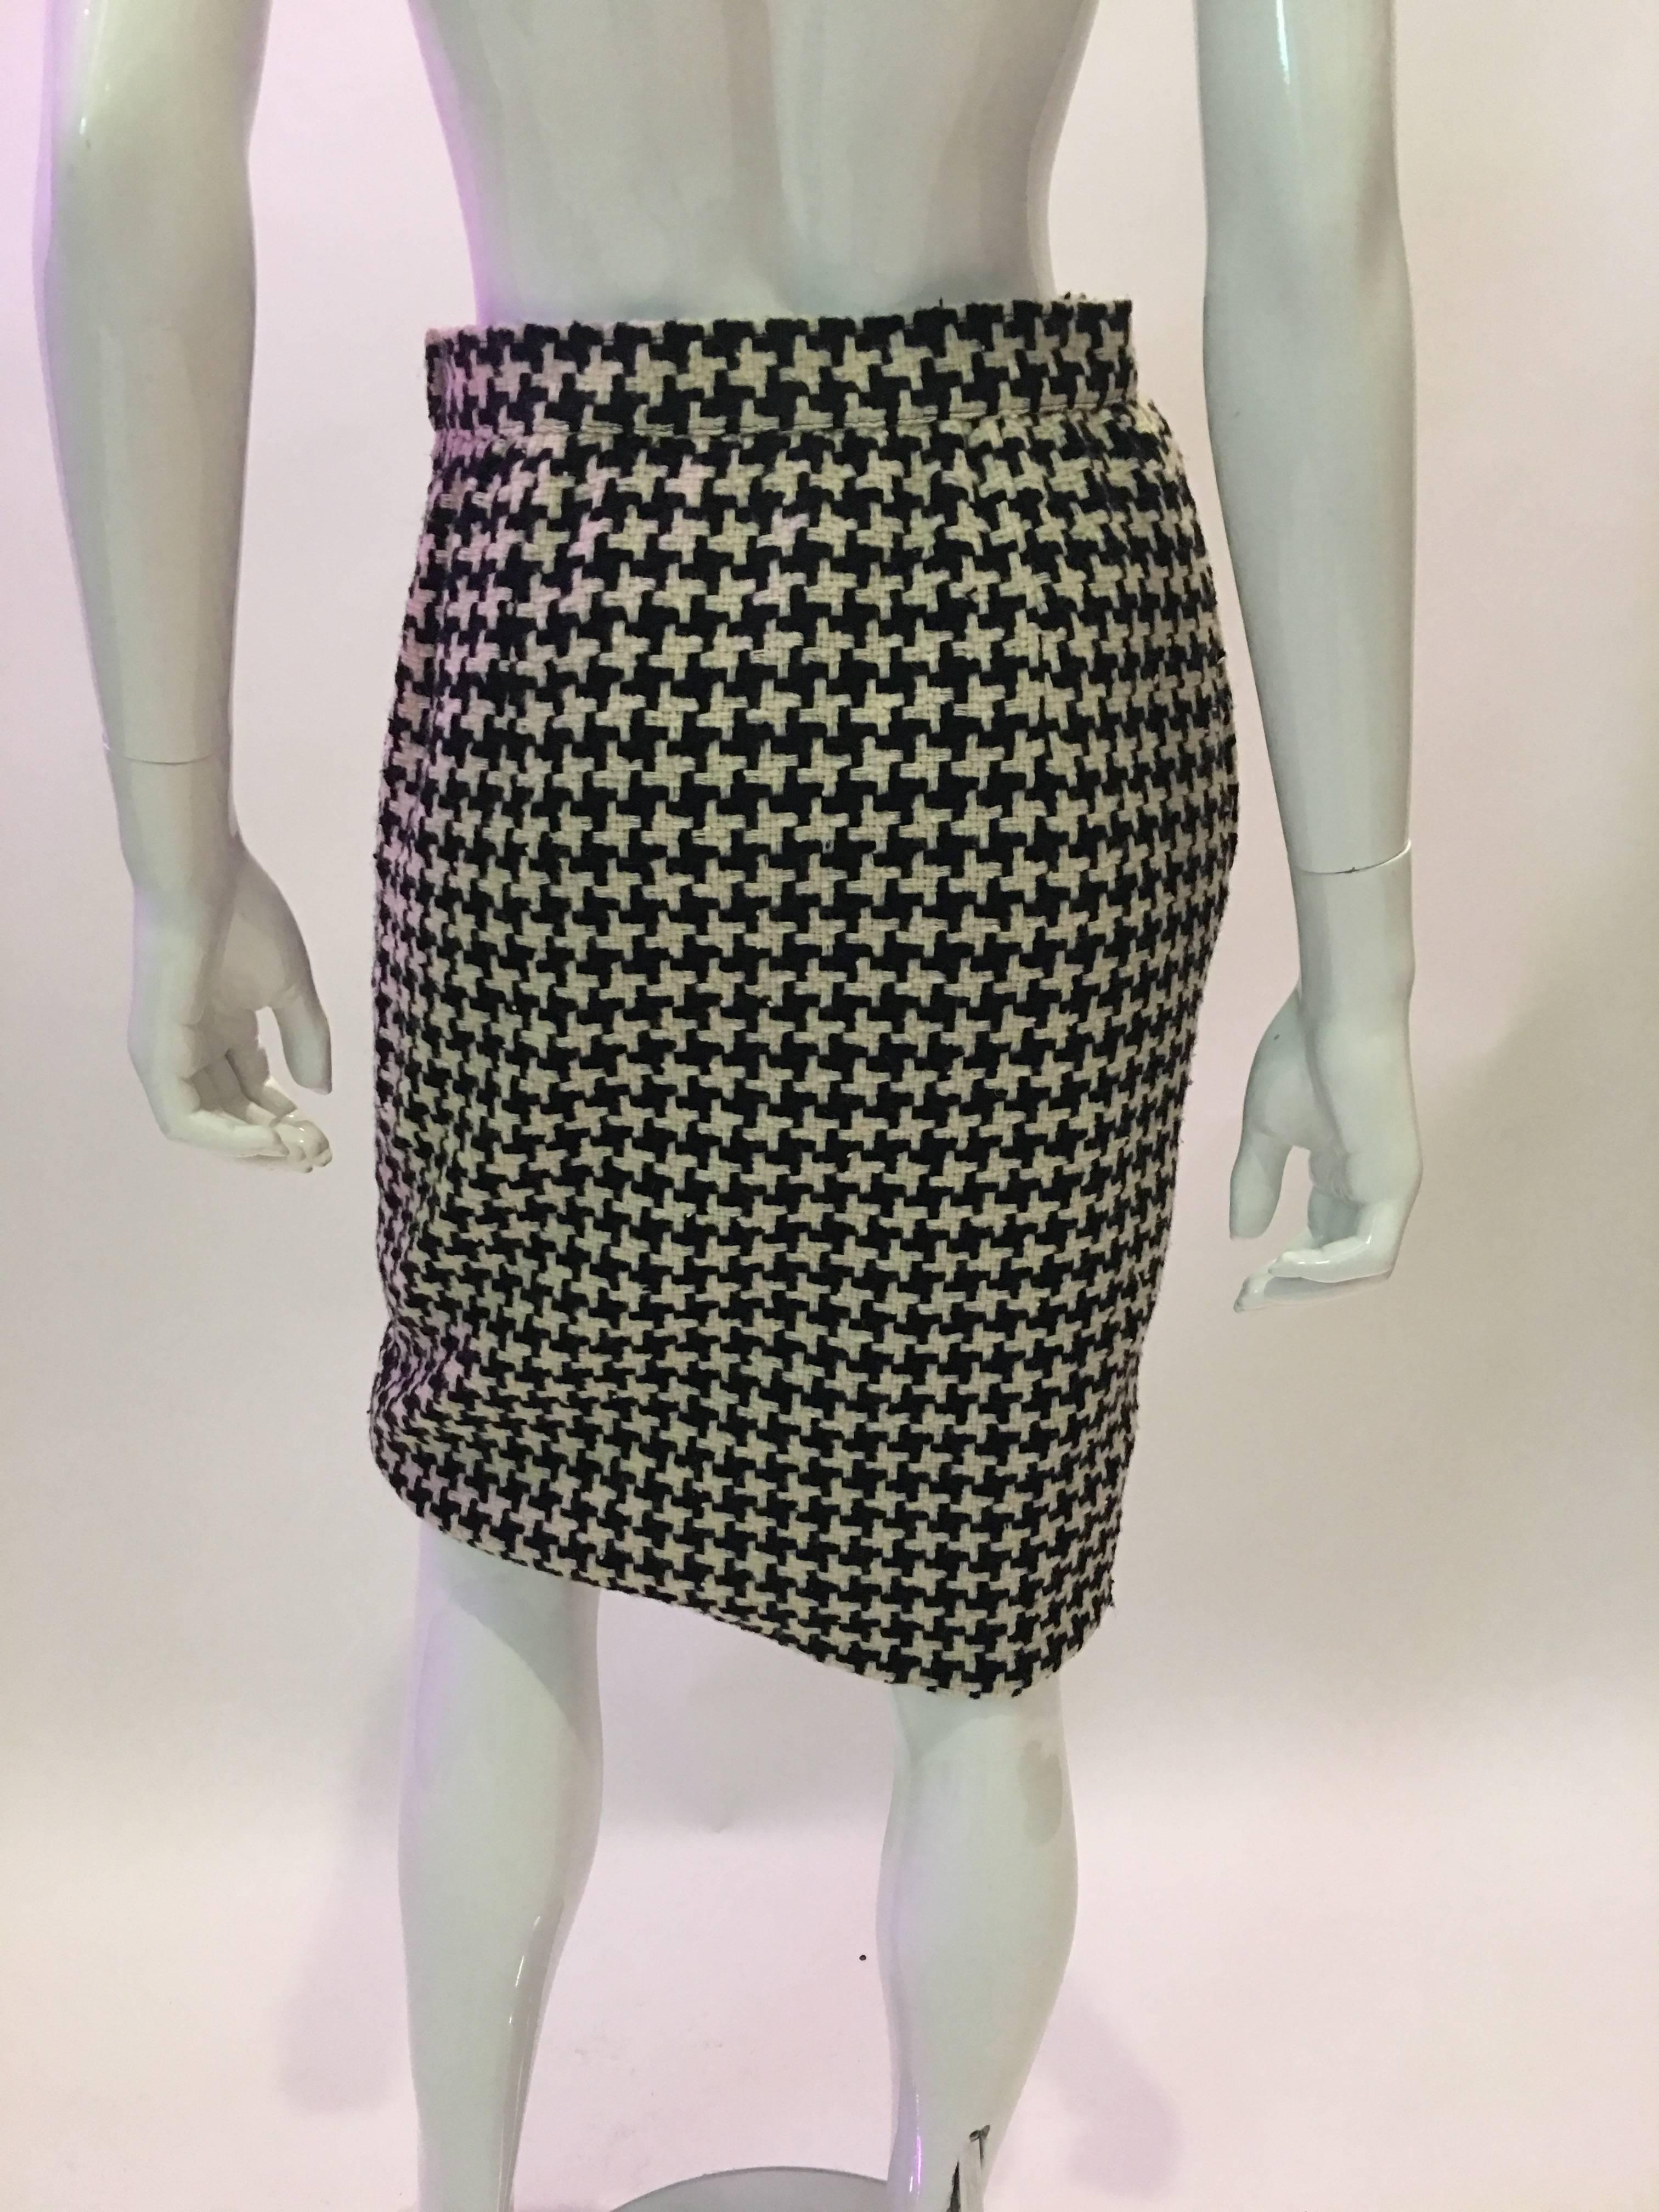  Ungaro 1980's Black and White Houndstooth Wool Skirt

Measurements - taken flat:
Waist: 14
Hip: 17